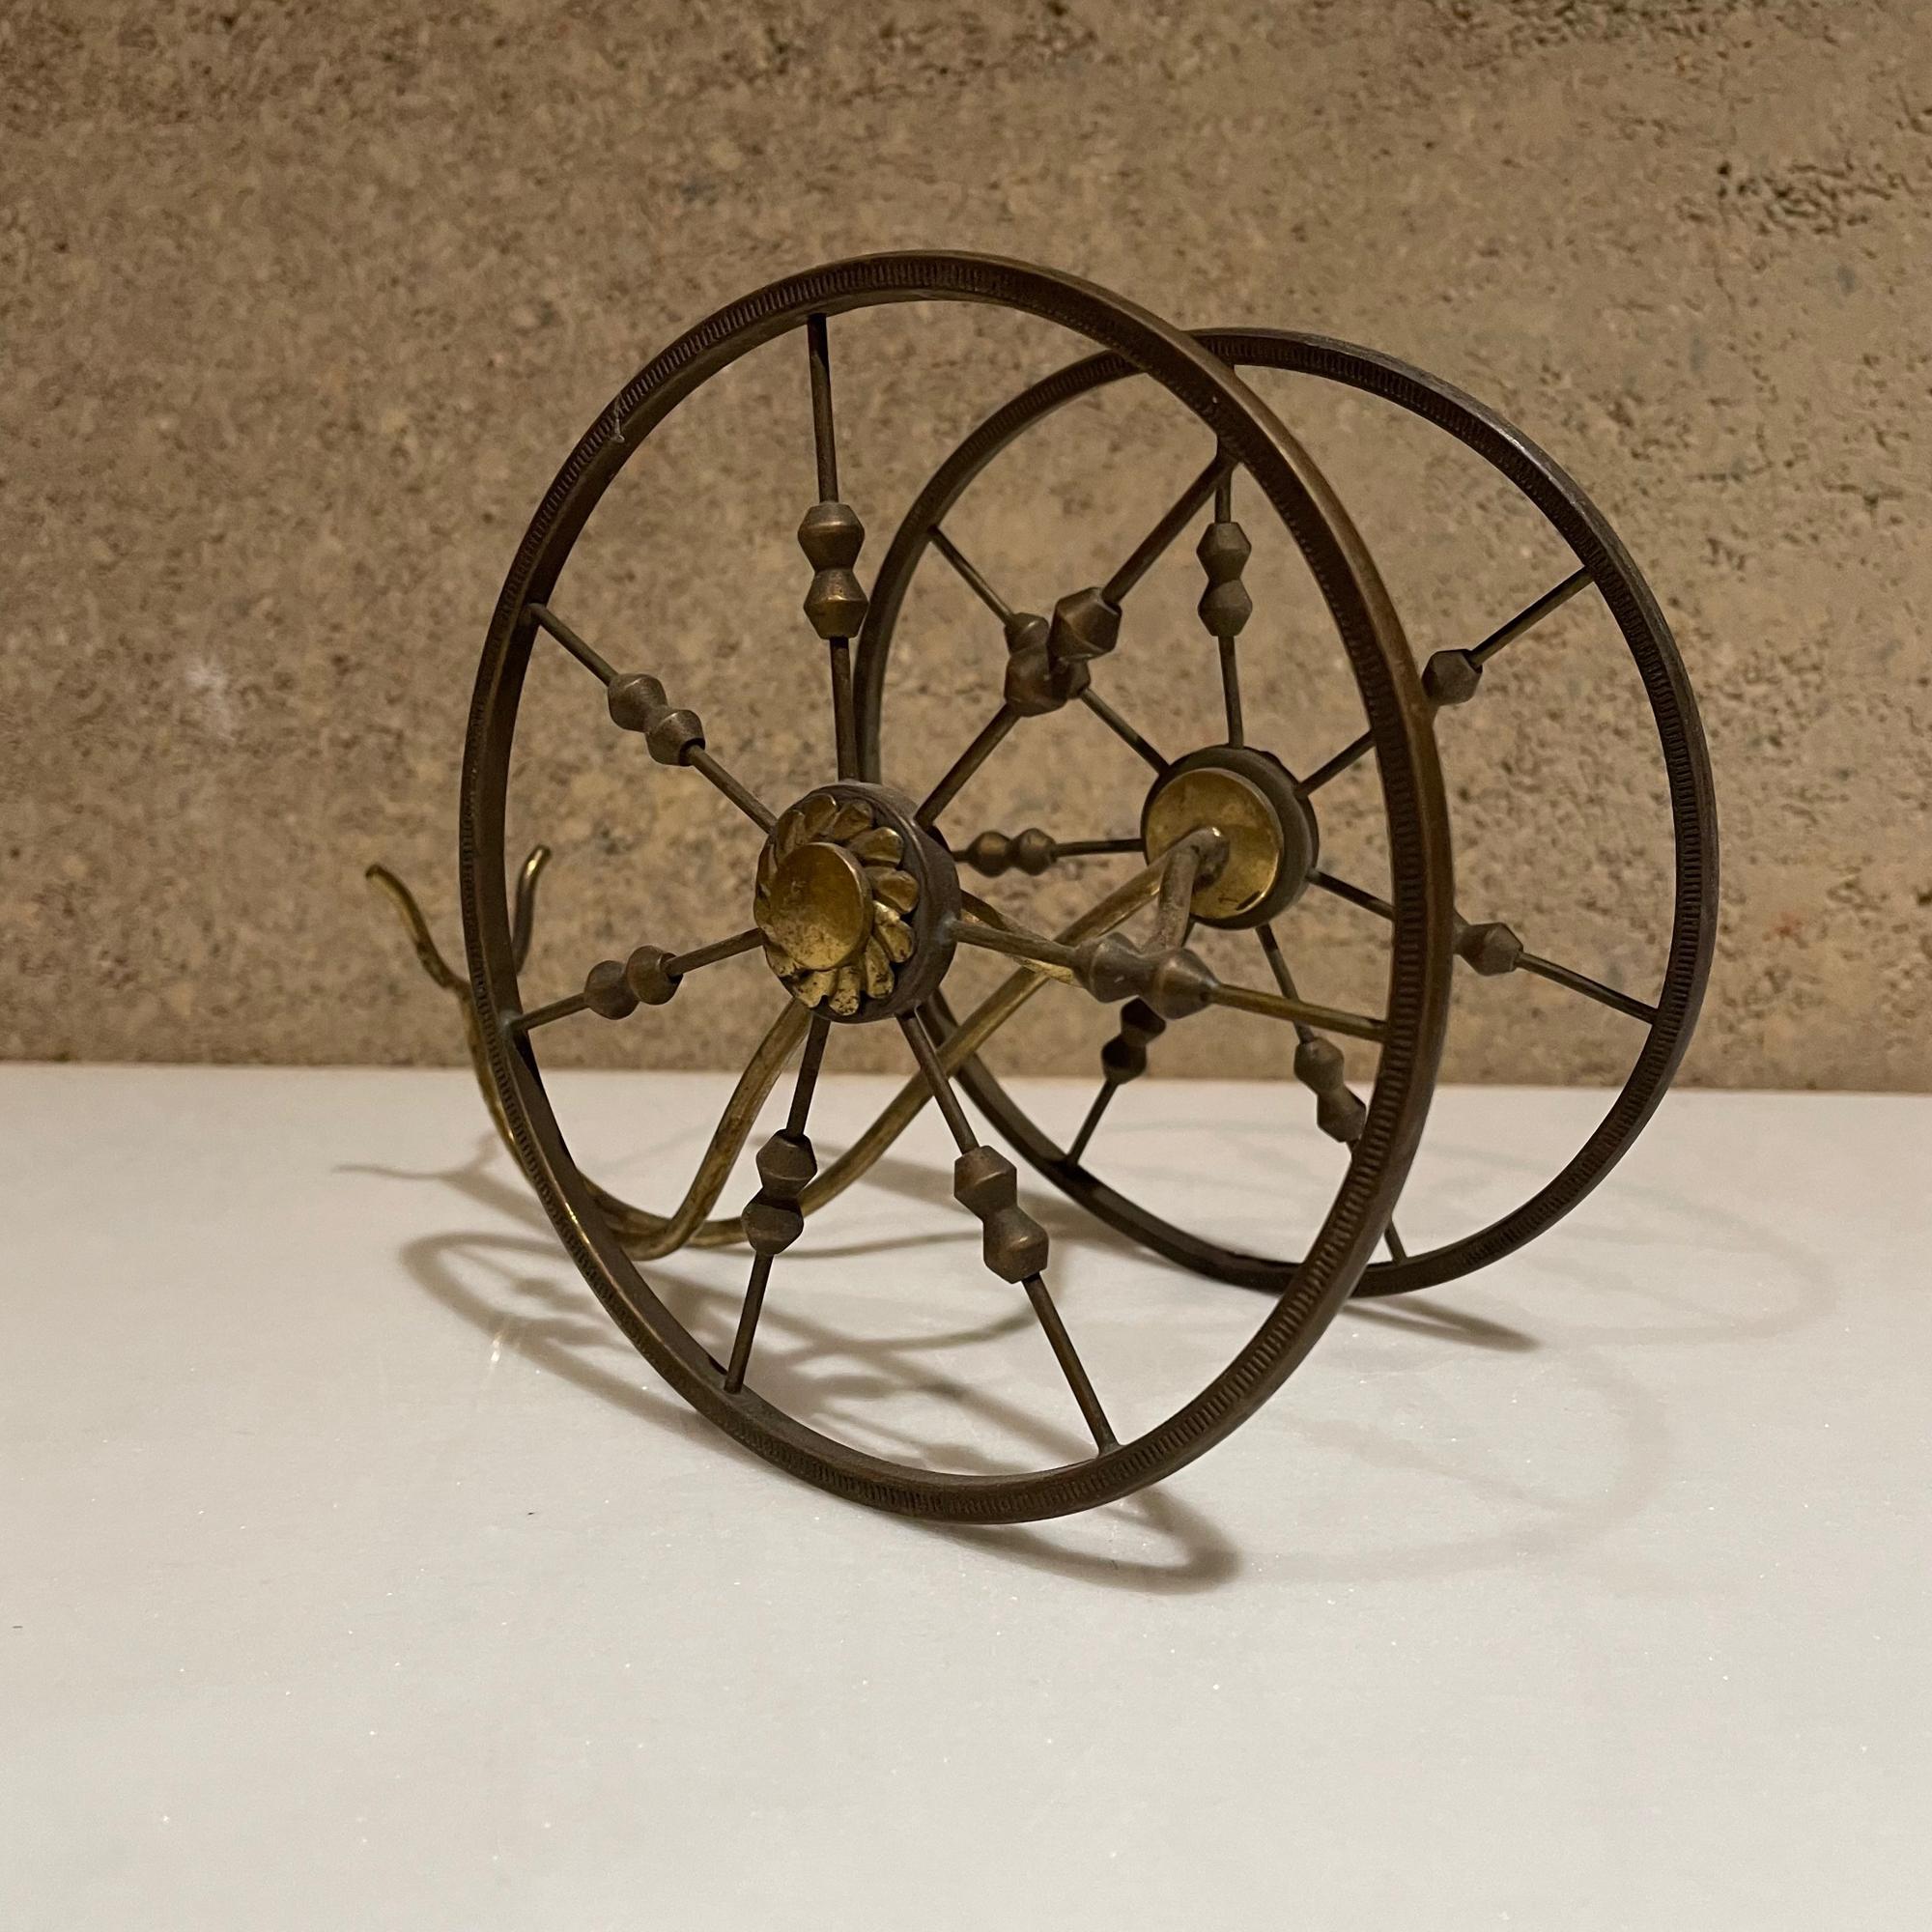 Mid-Century Modern 1950s Decorative Wine Bottle Holder Spoke Wheel in Sculptural Brass from Italy  